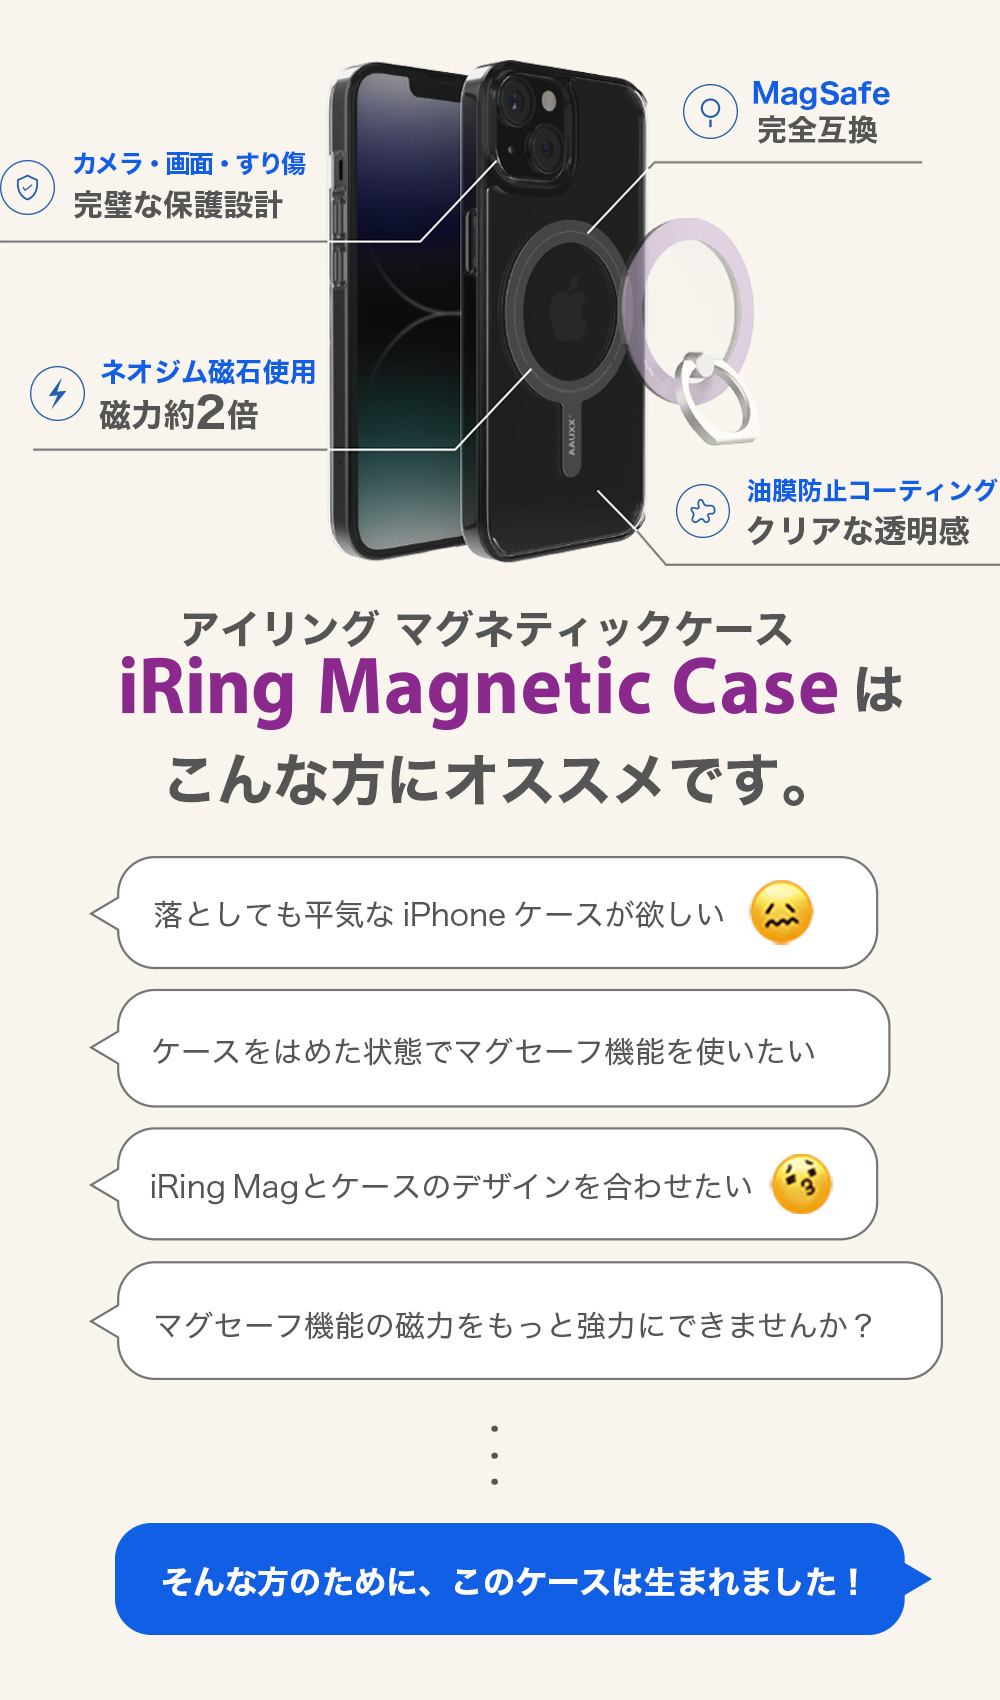 AAUXX iRing Magnetic Case(アイリング マグネティックケース)機能イメージ